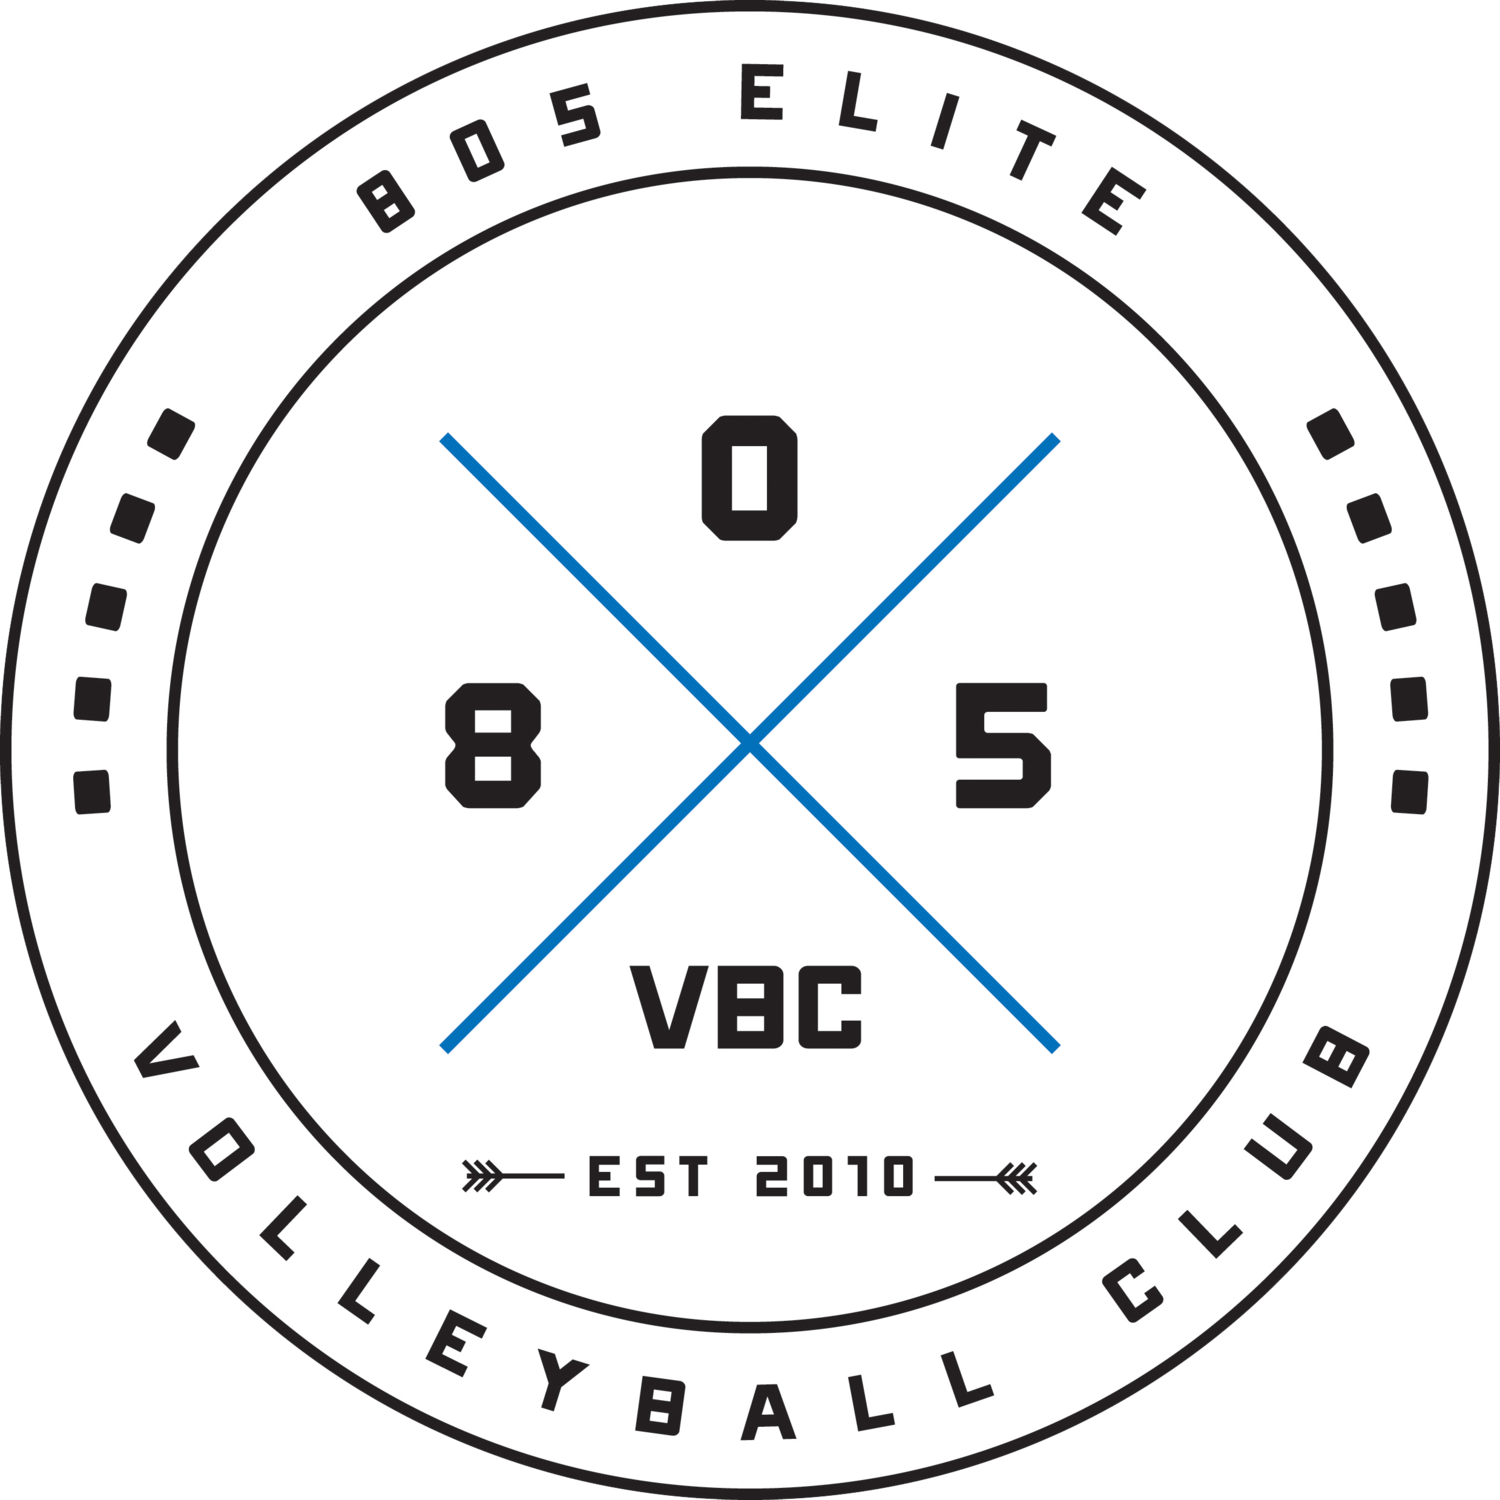 805 Elite Volleyball Club